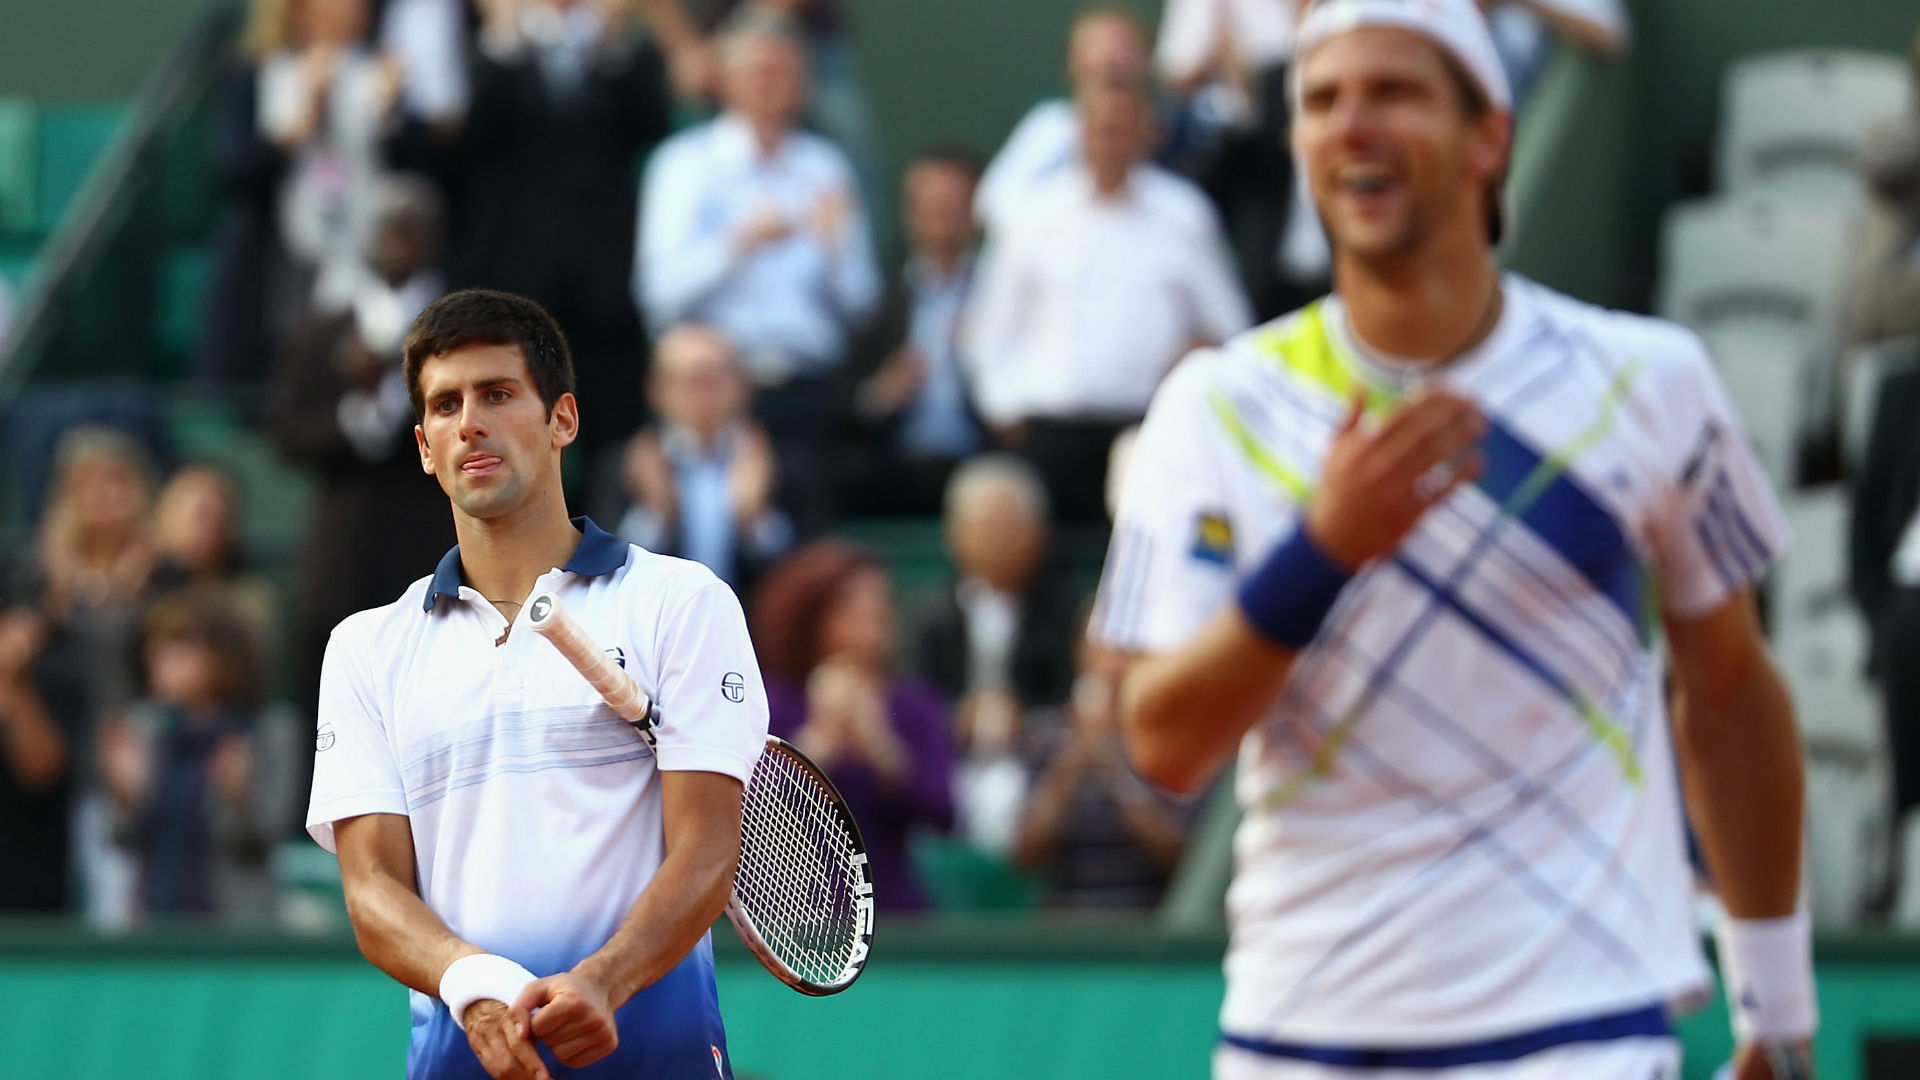 Sky Sports to show exclusive ATP & WTA tennis with Novak Djokovic